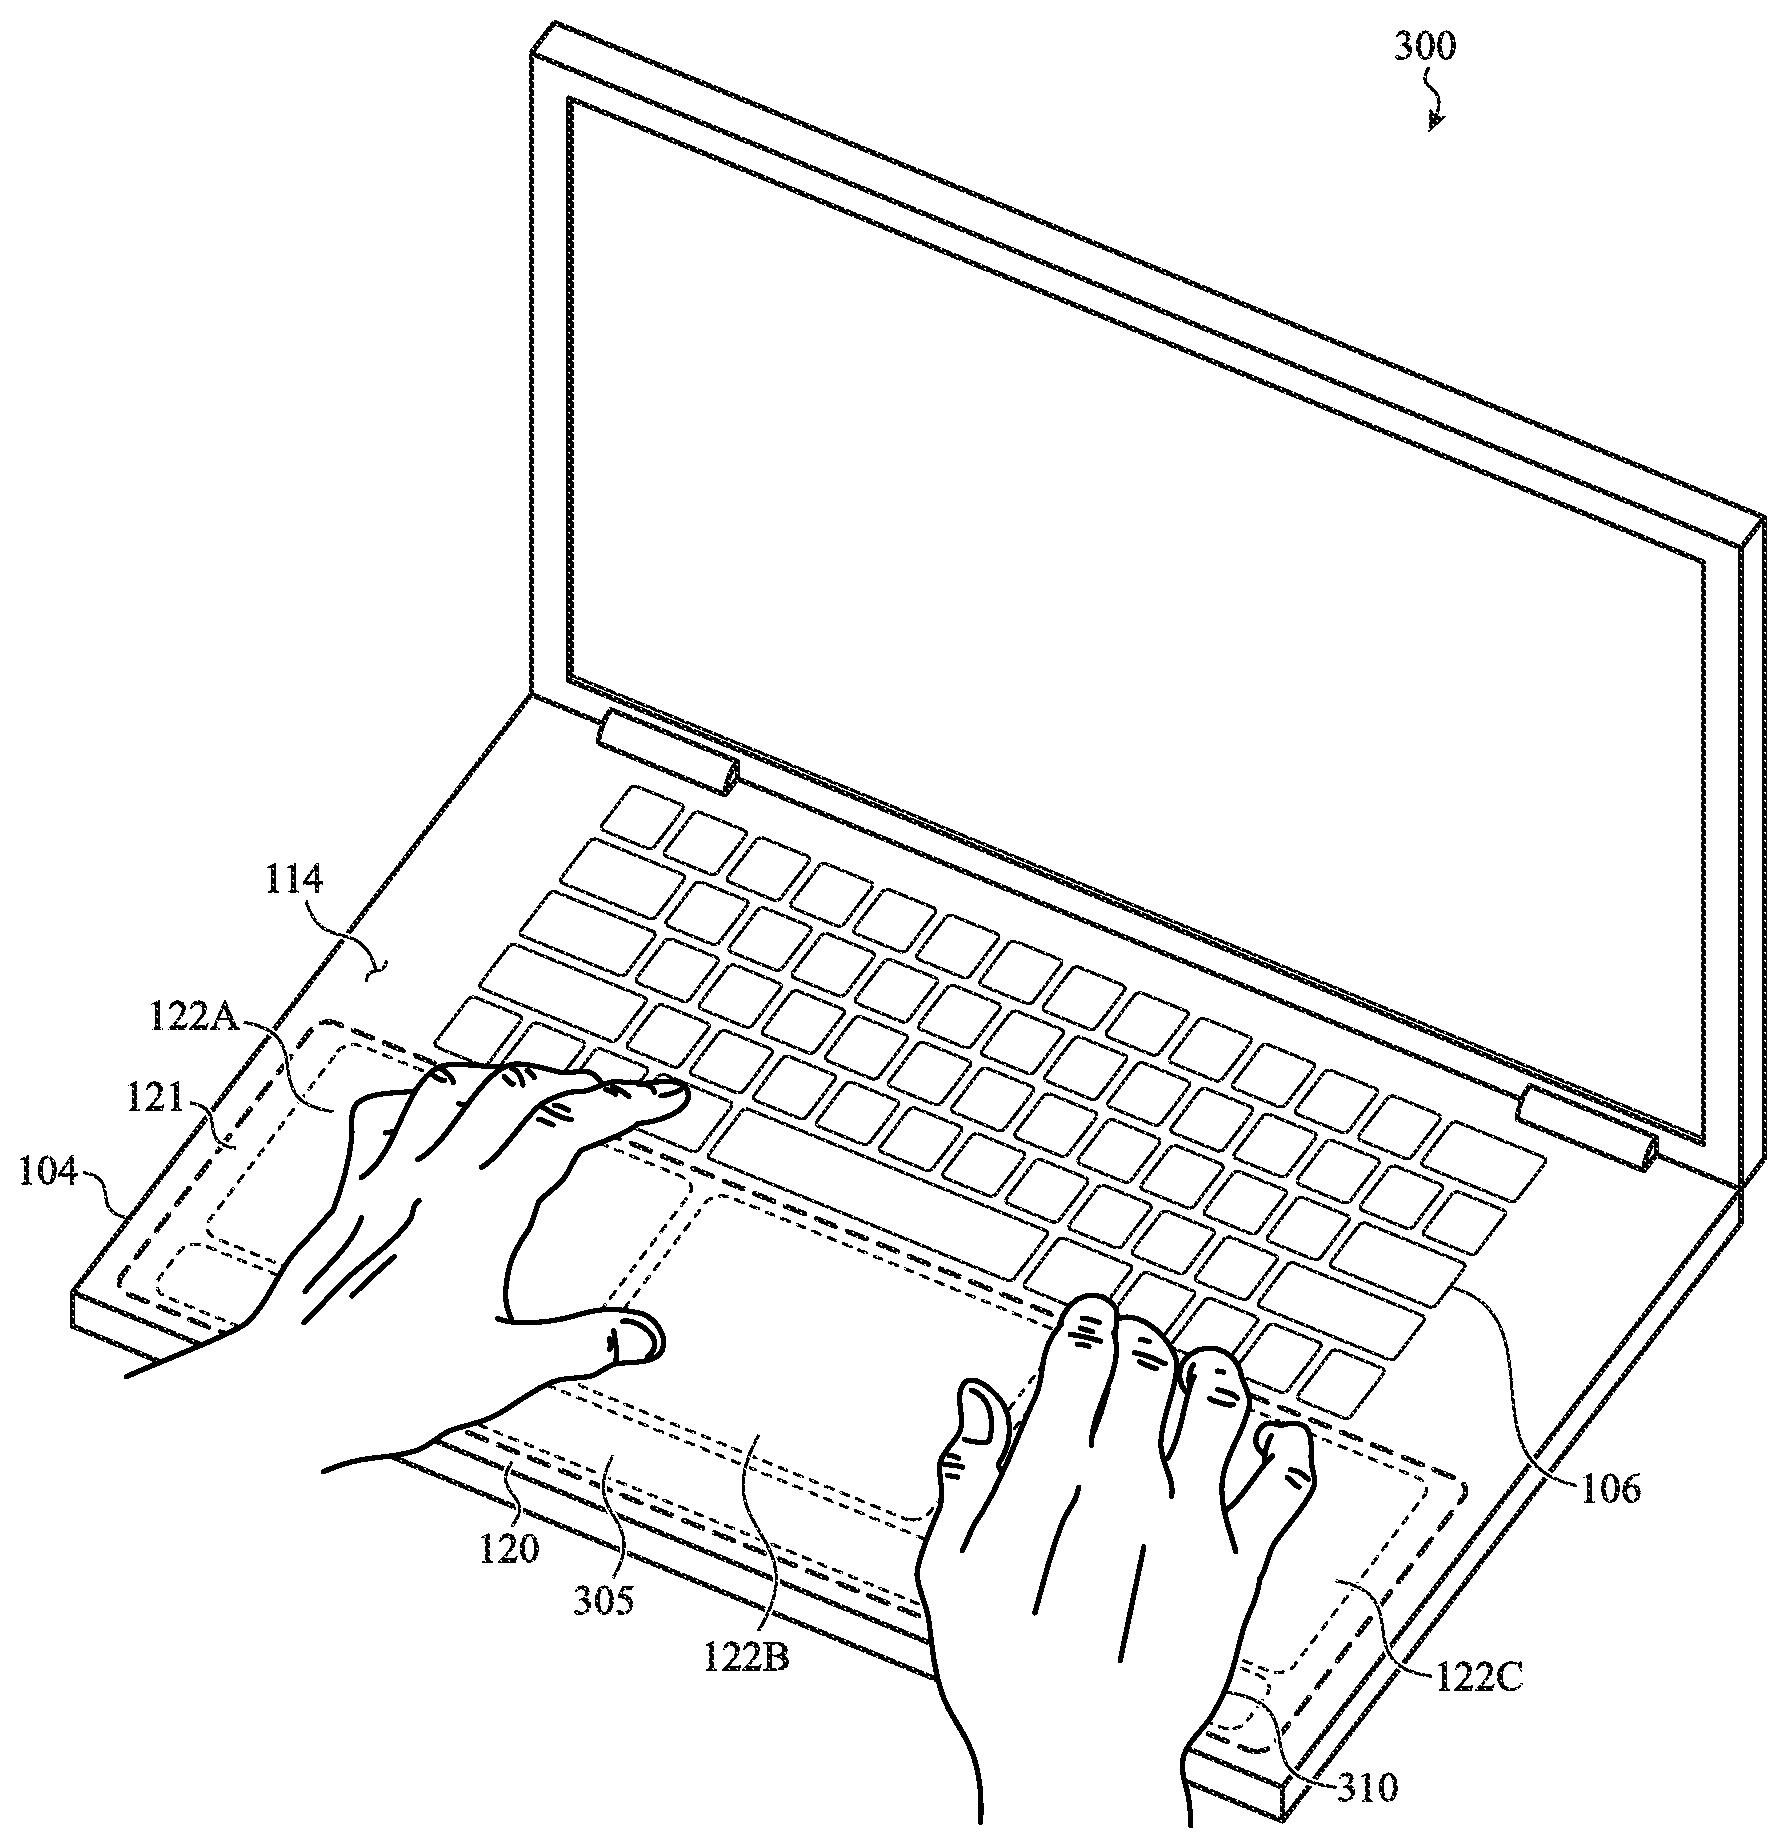 personal-computing-patents